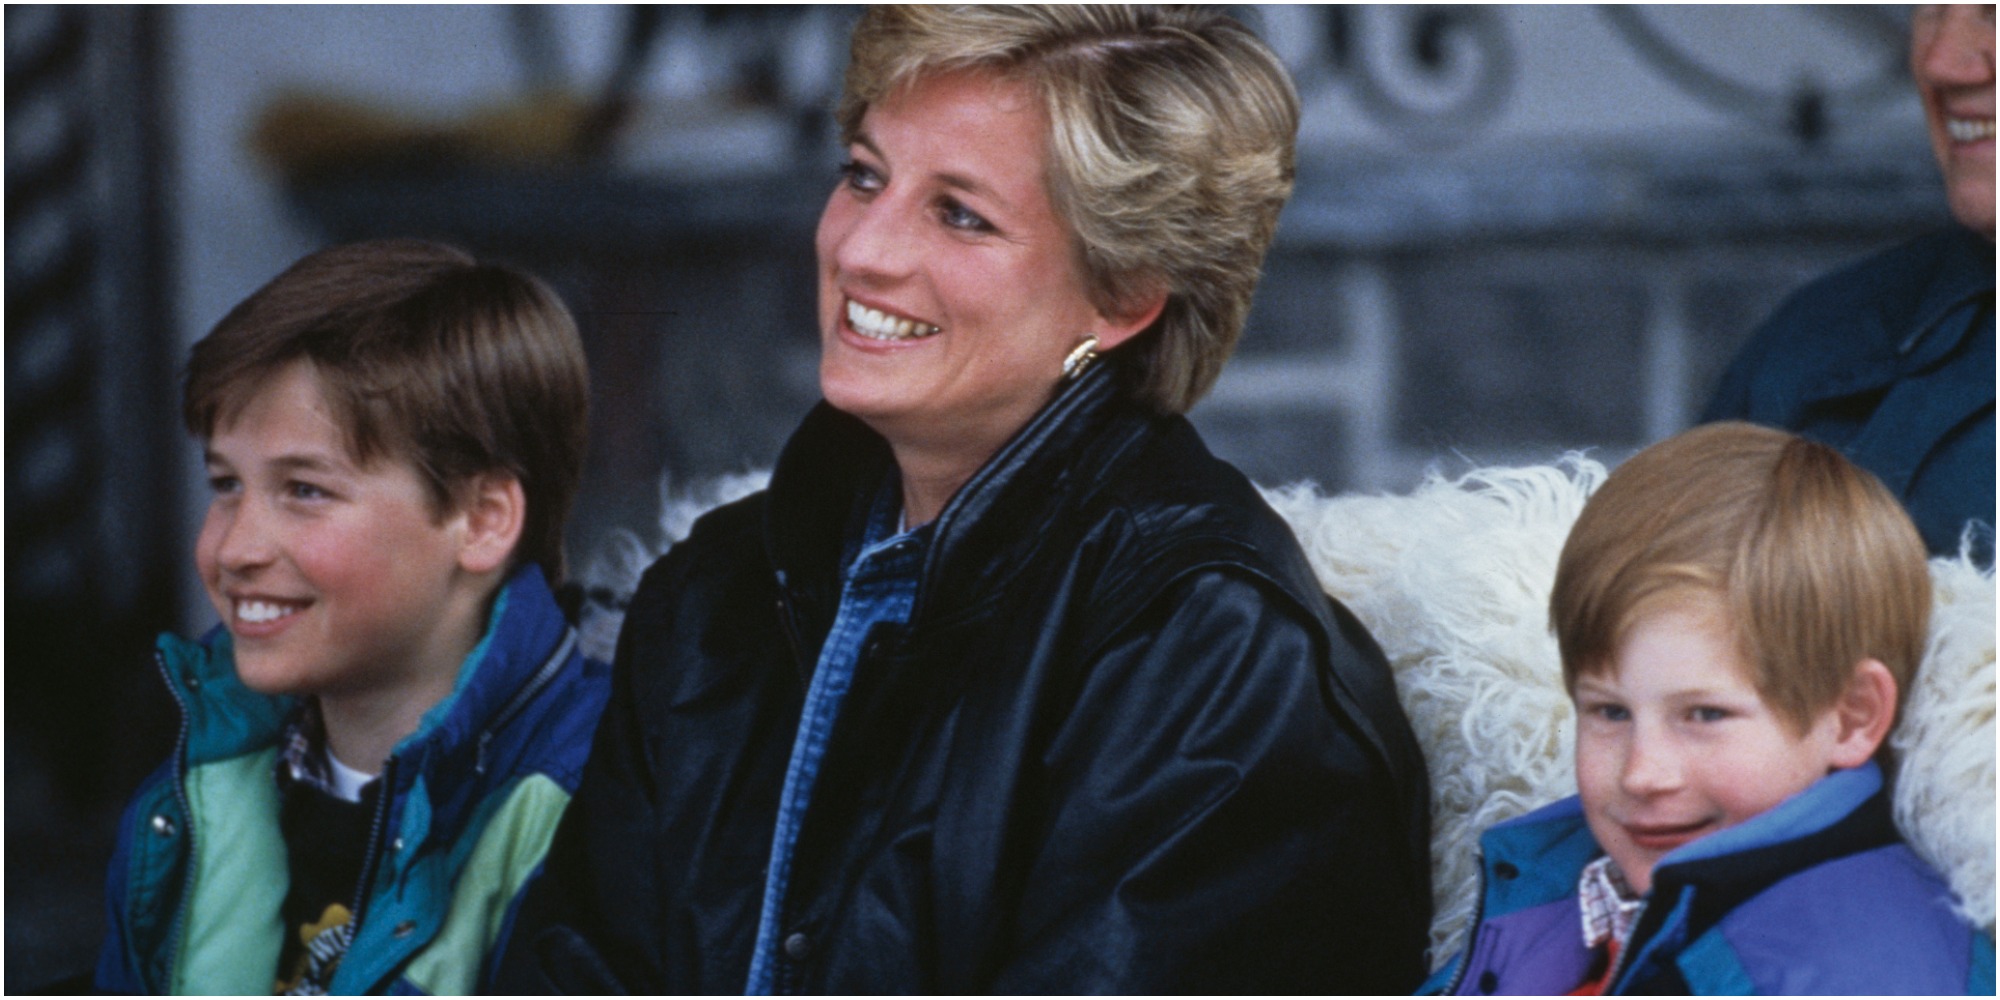 Prince William, Princess Diana, Prince Harry laugh on a sleigh ride.